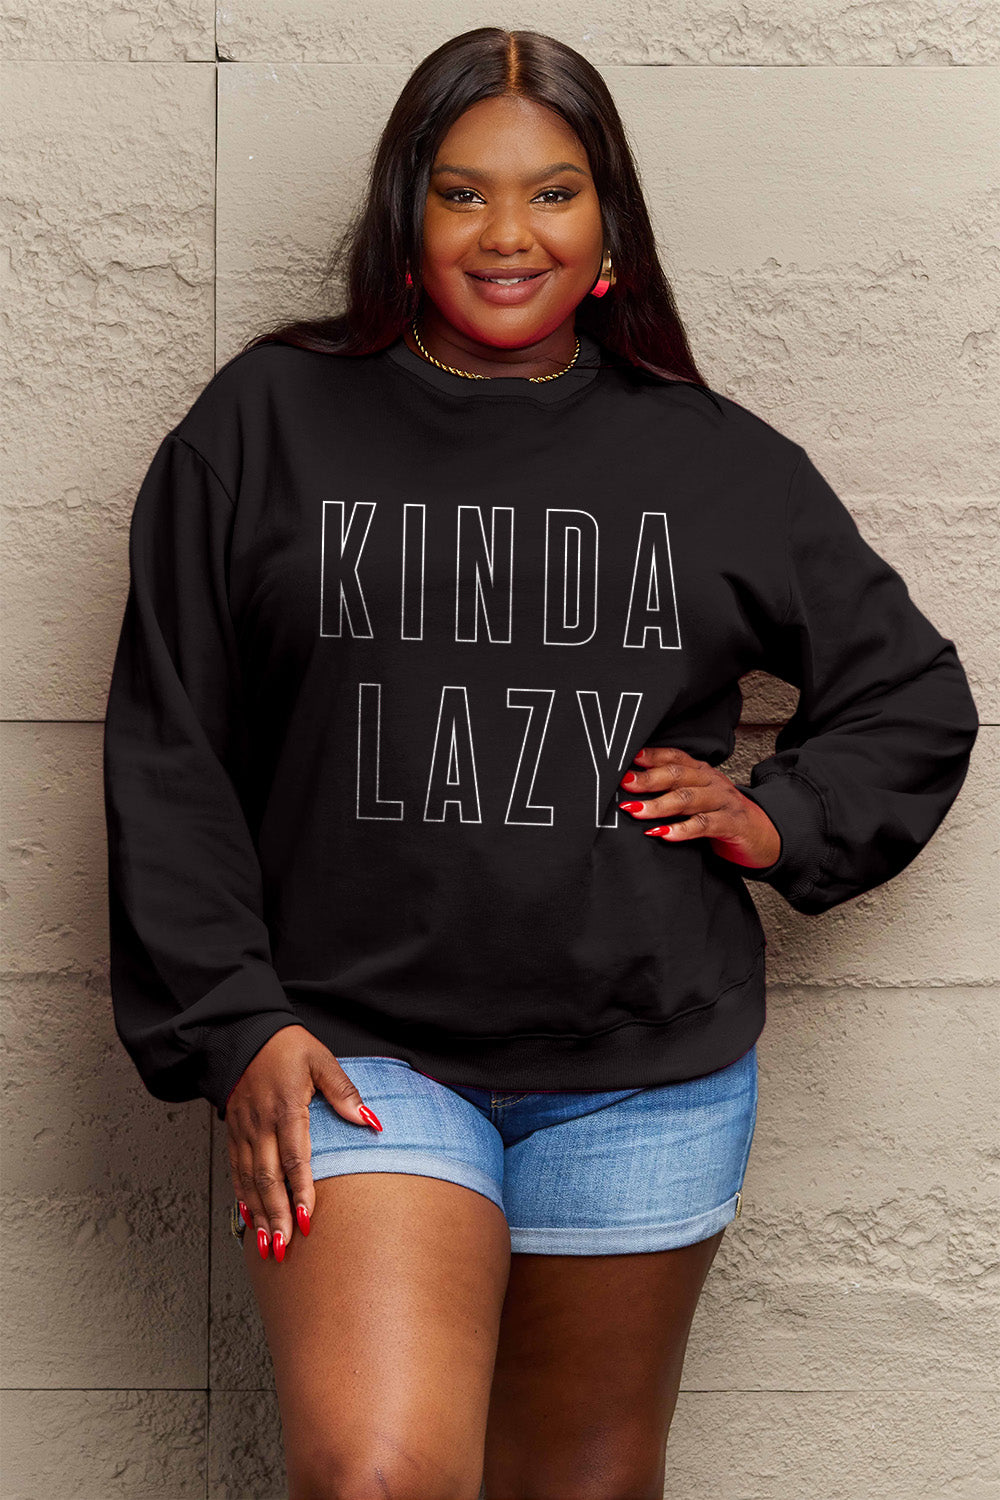 Simply Love Full Size KINDA LAZY Round Neck Sweatshirt